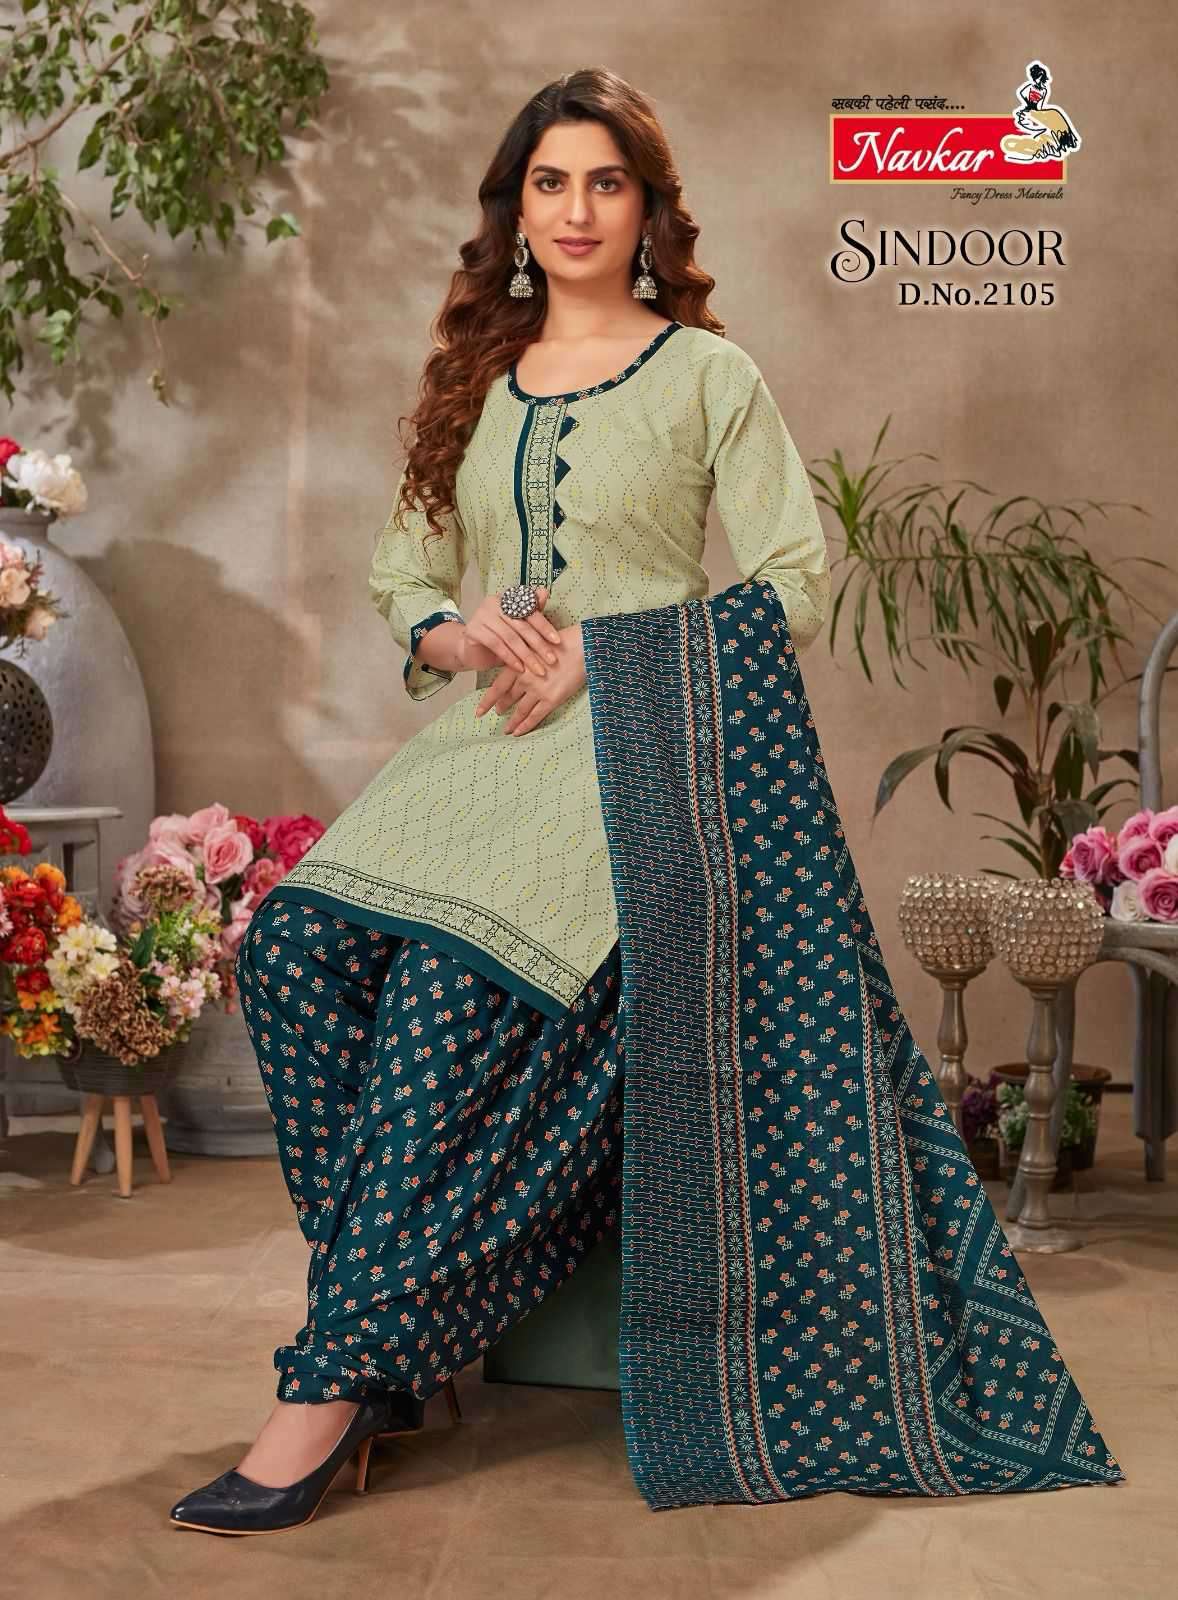 Buy IYALAFAB® WOMEN'S Georgette Punjabi Suit Semi Stitched Salwar Suit (Patiyala  Suit) (New anarkali shuitSF201288 Blue Free Size) at Amazon.in